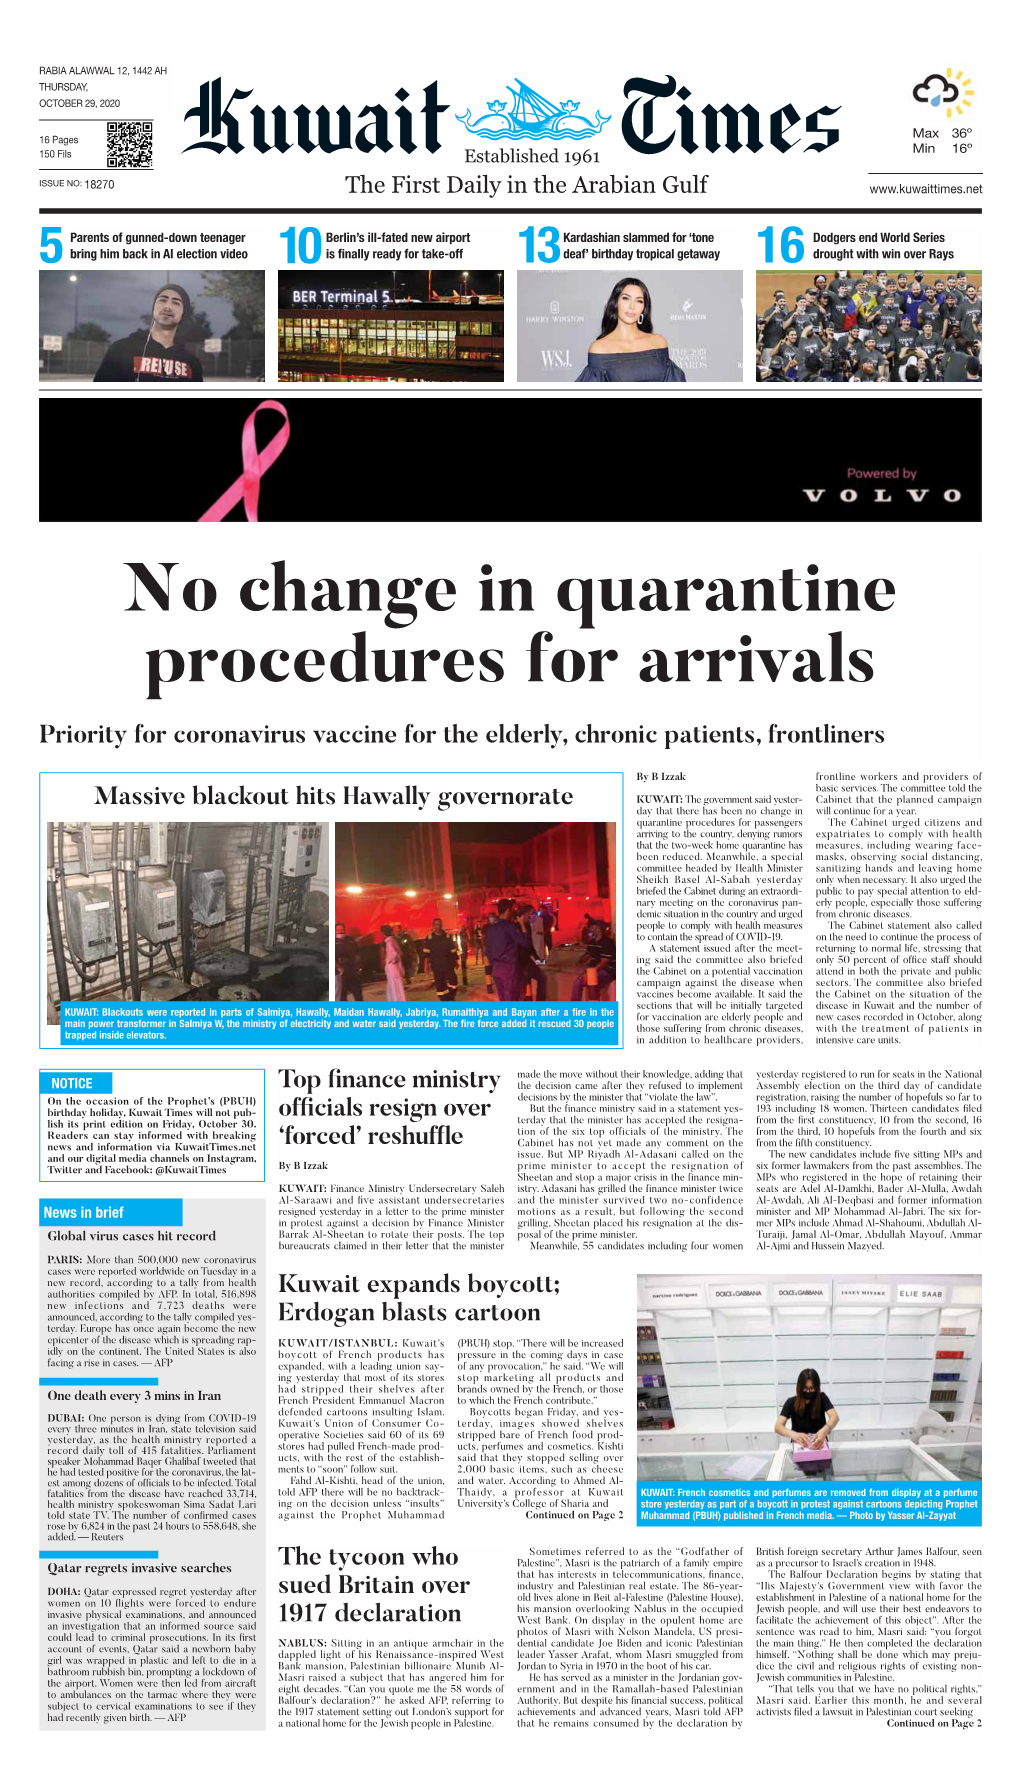 No Change in Quarantine Procedures for Arrivals